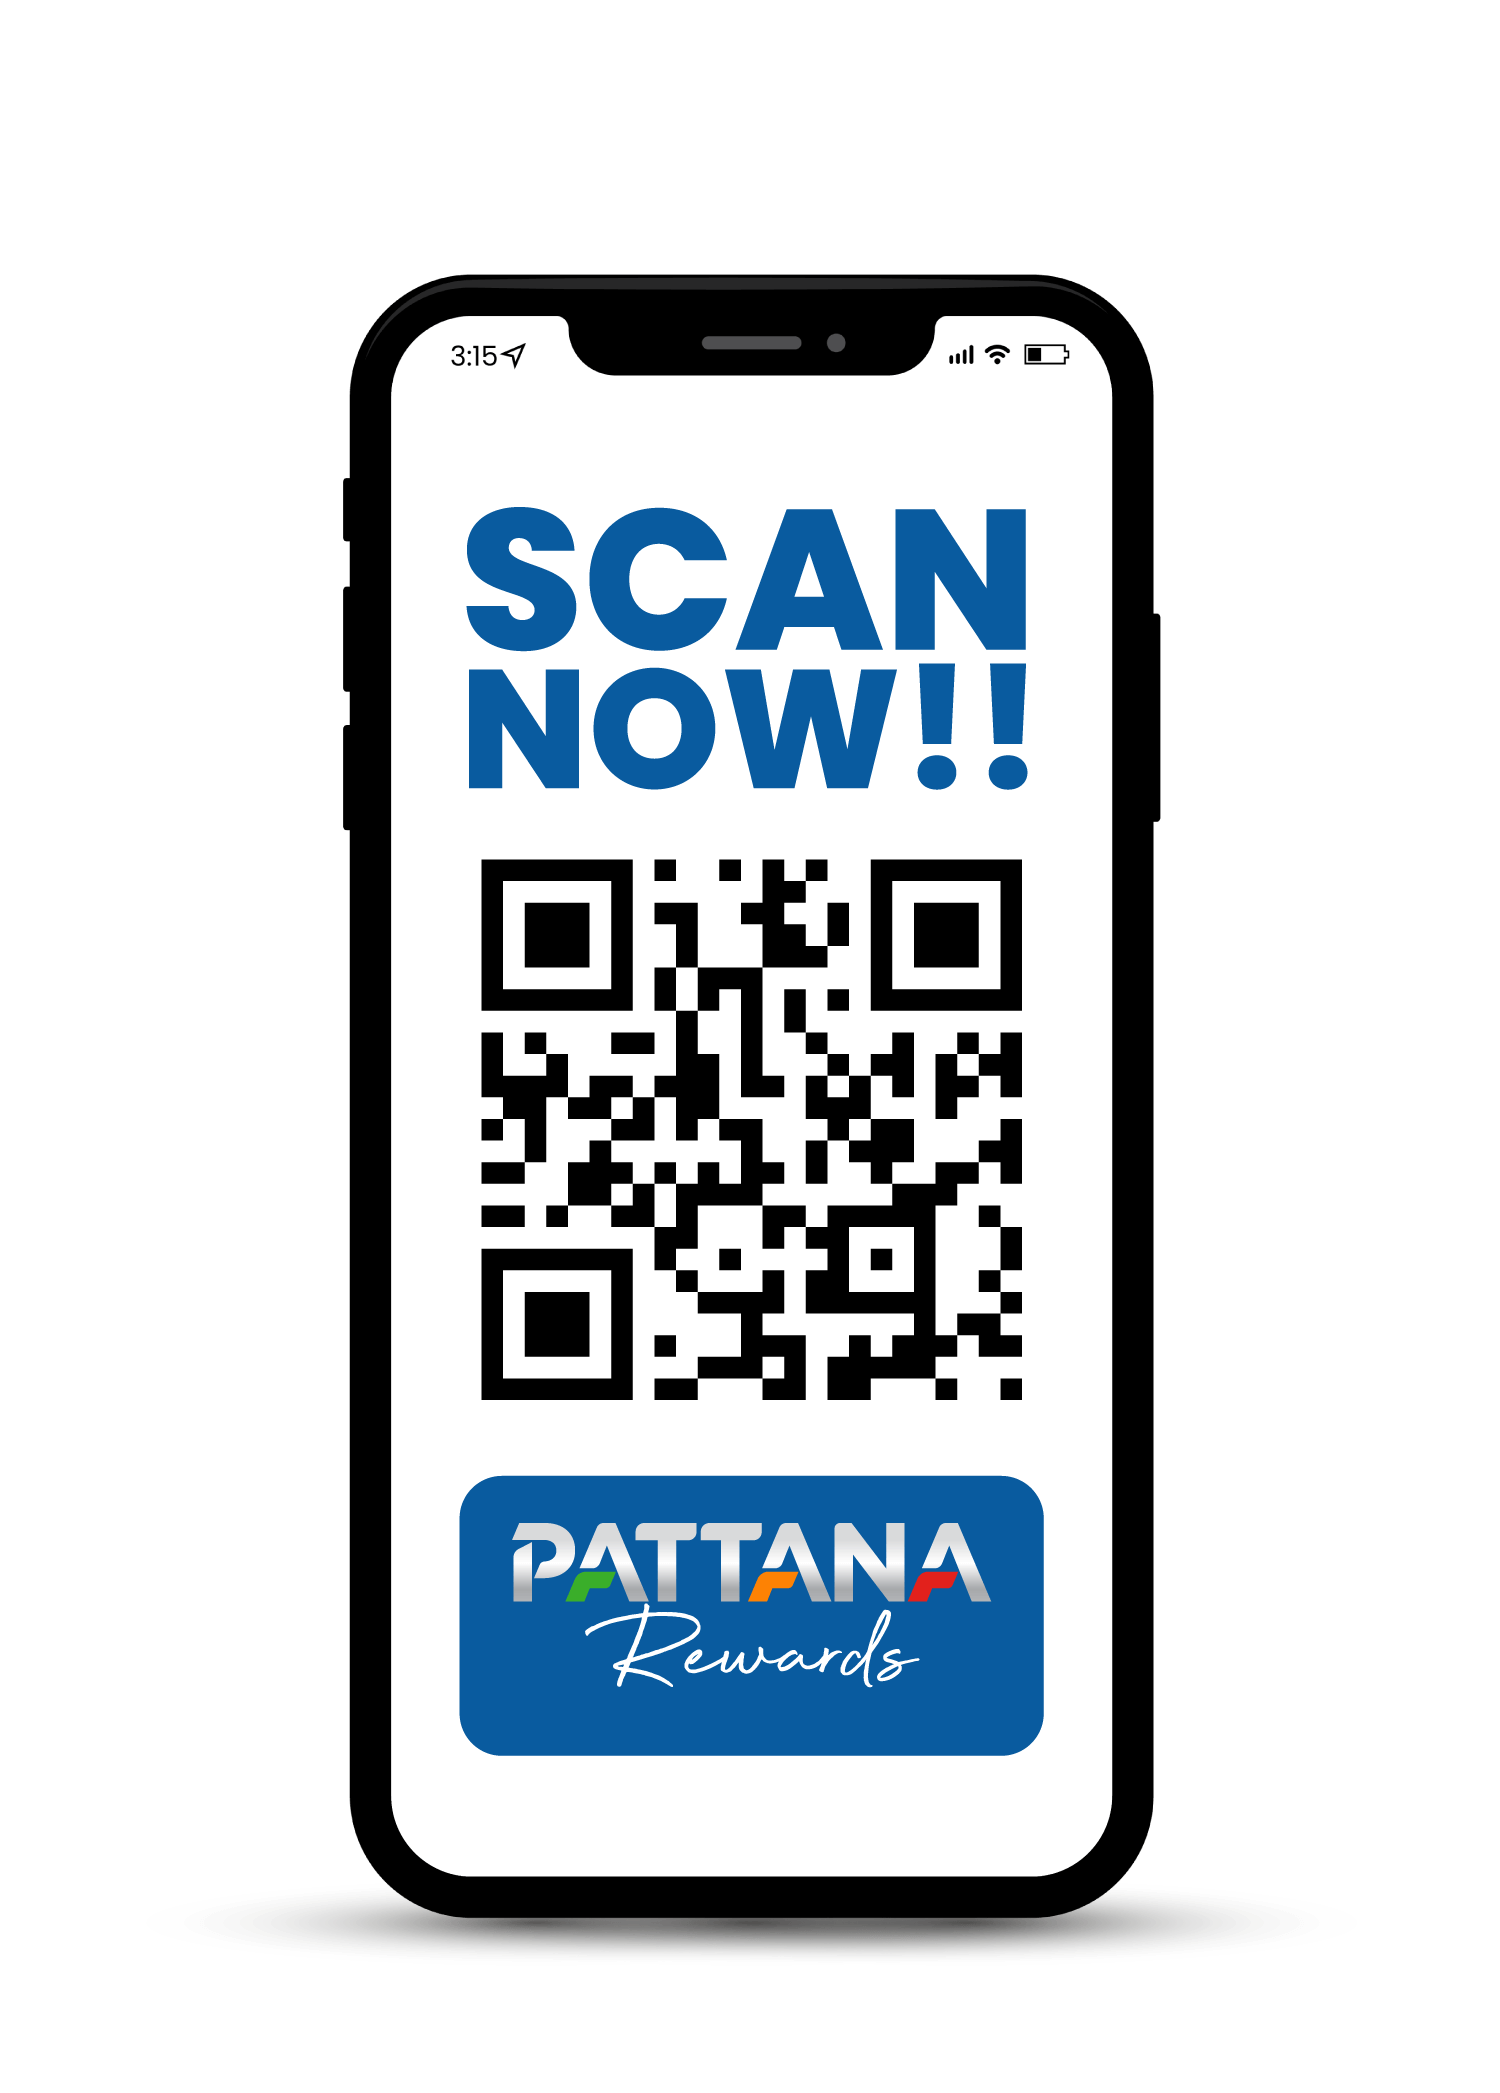 Pattana Resort - Mobile Sign Up Step 1